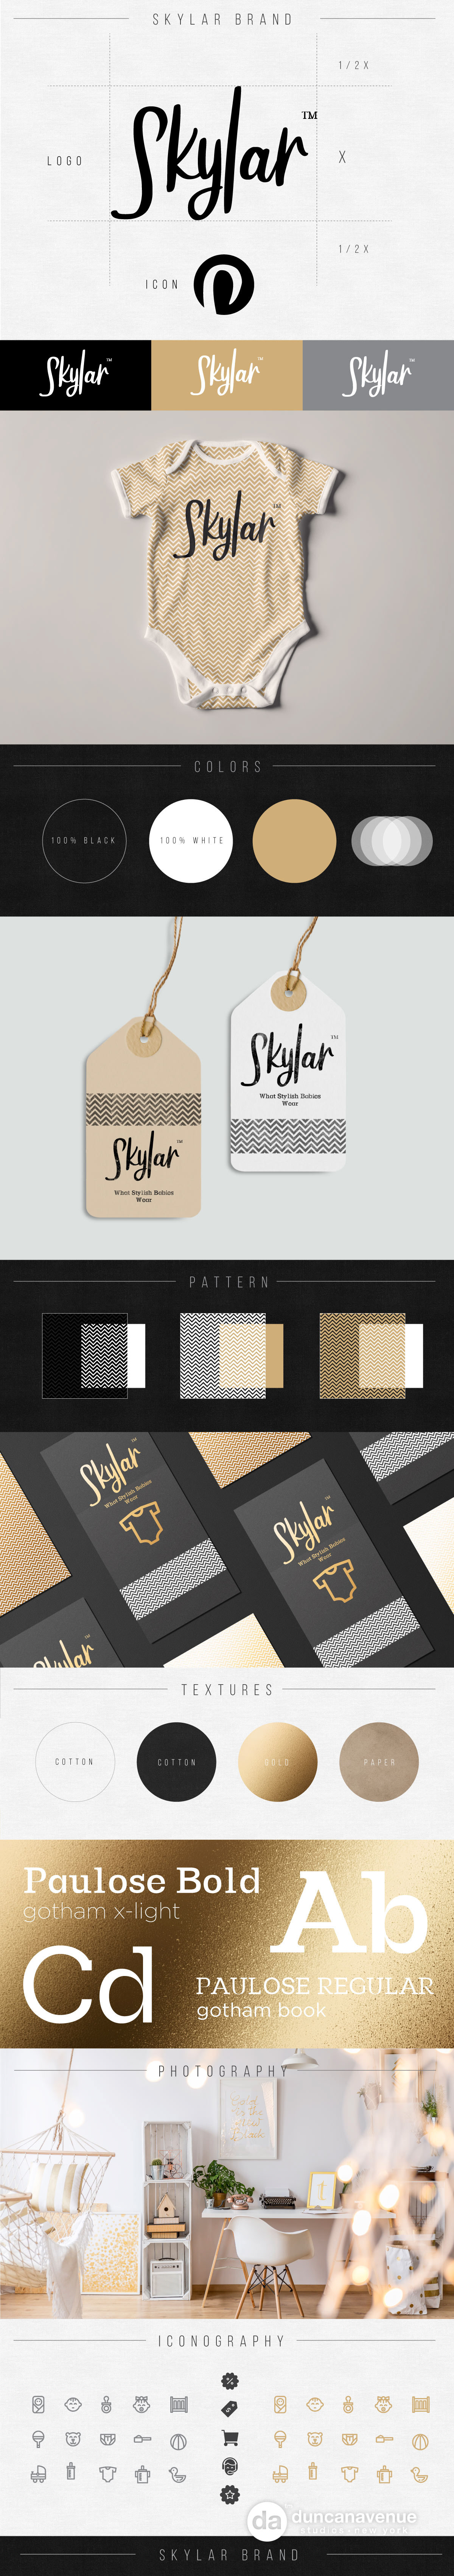 Skylar Brand Design and Development by Maxwell Alexander